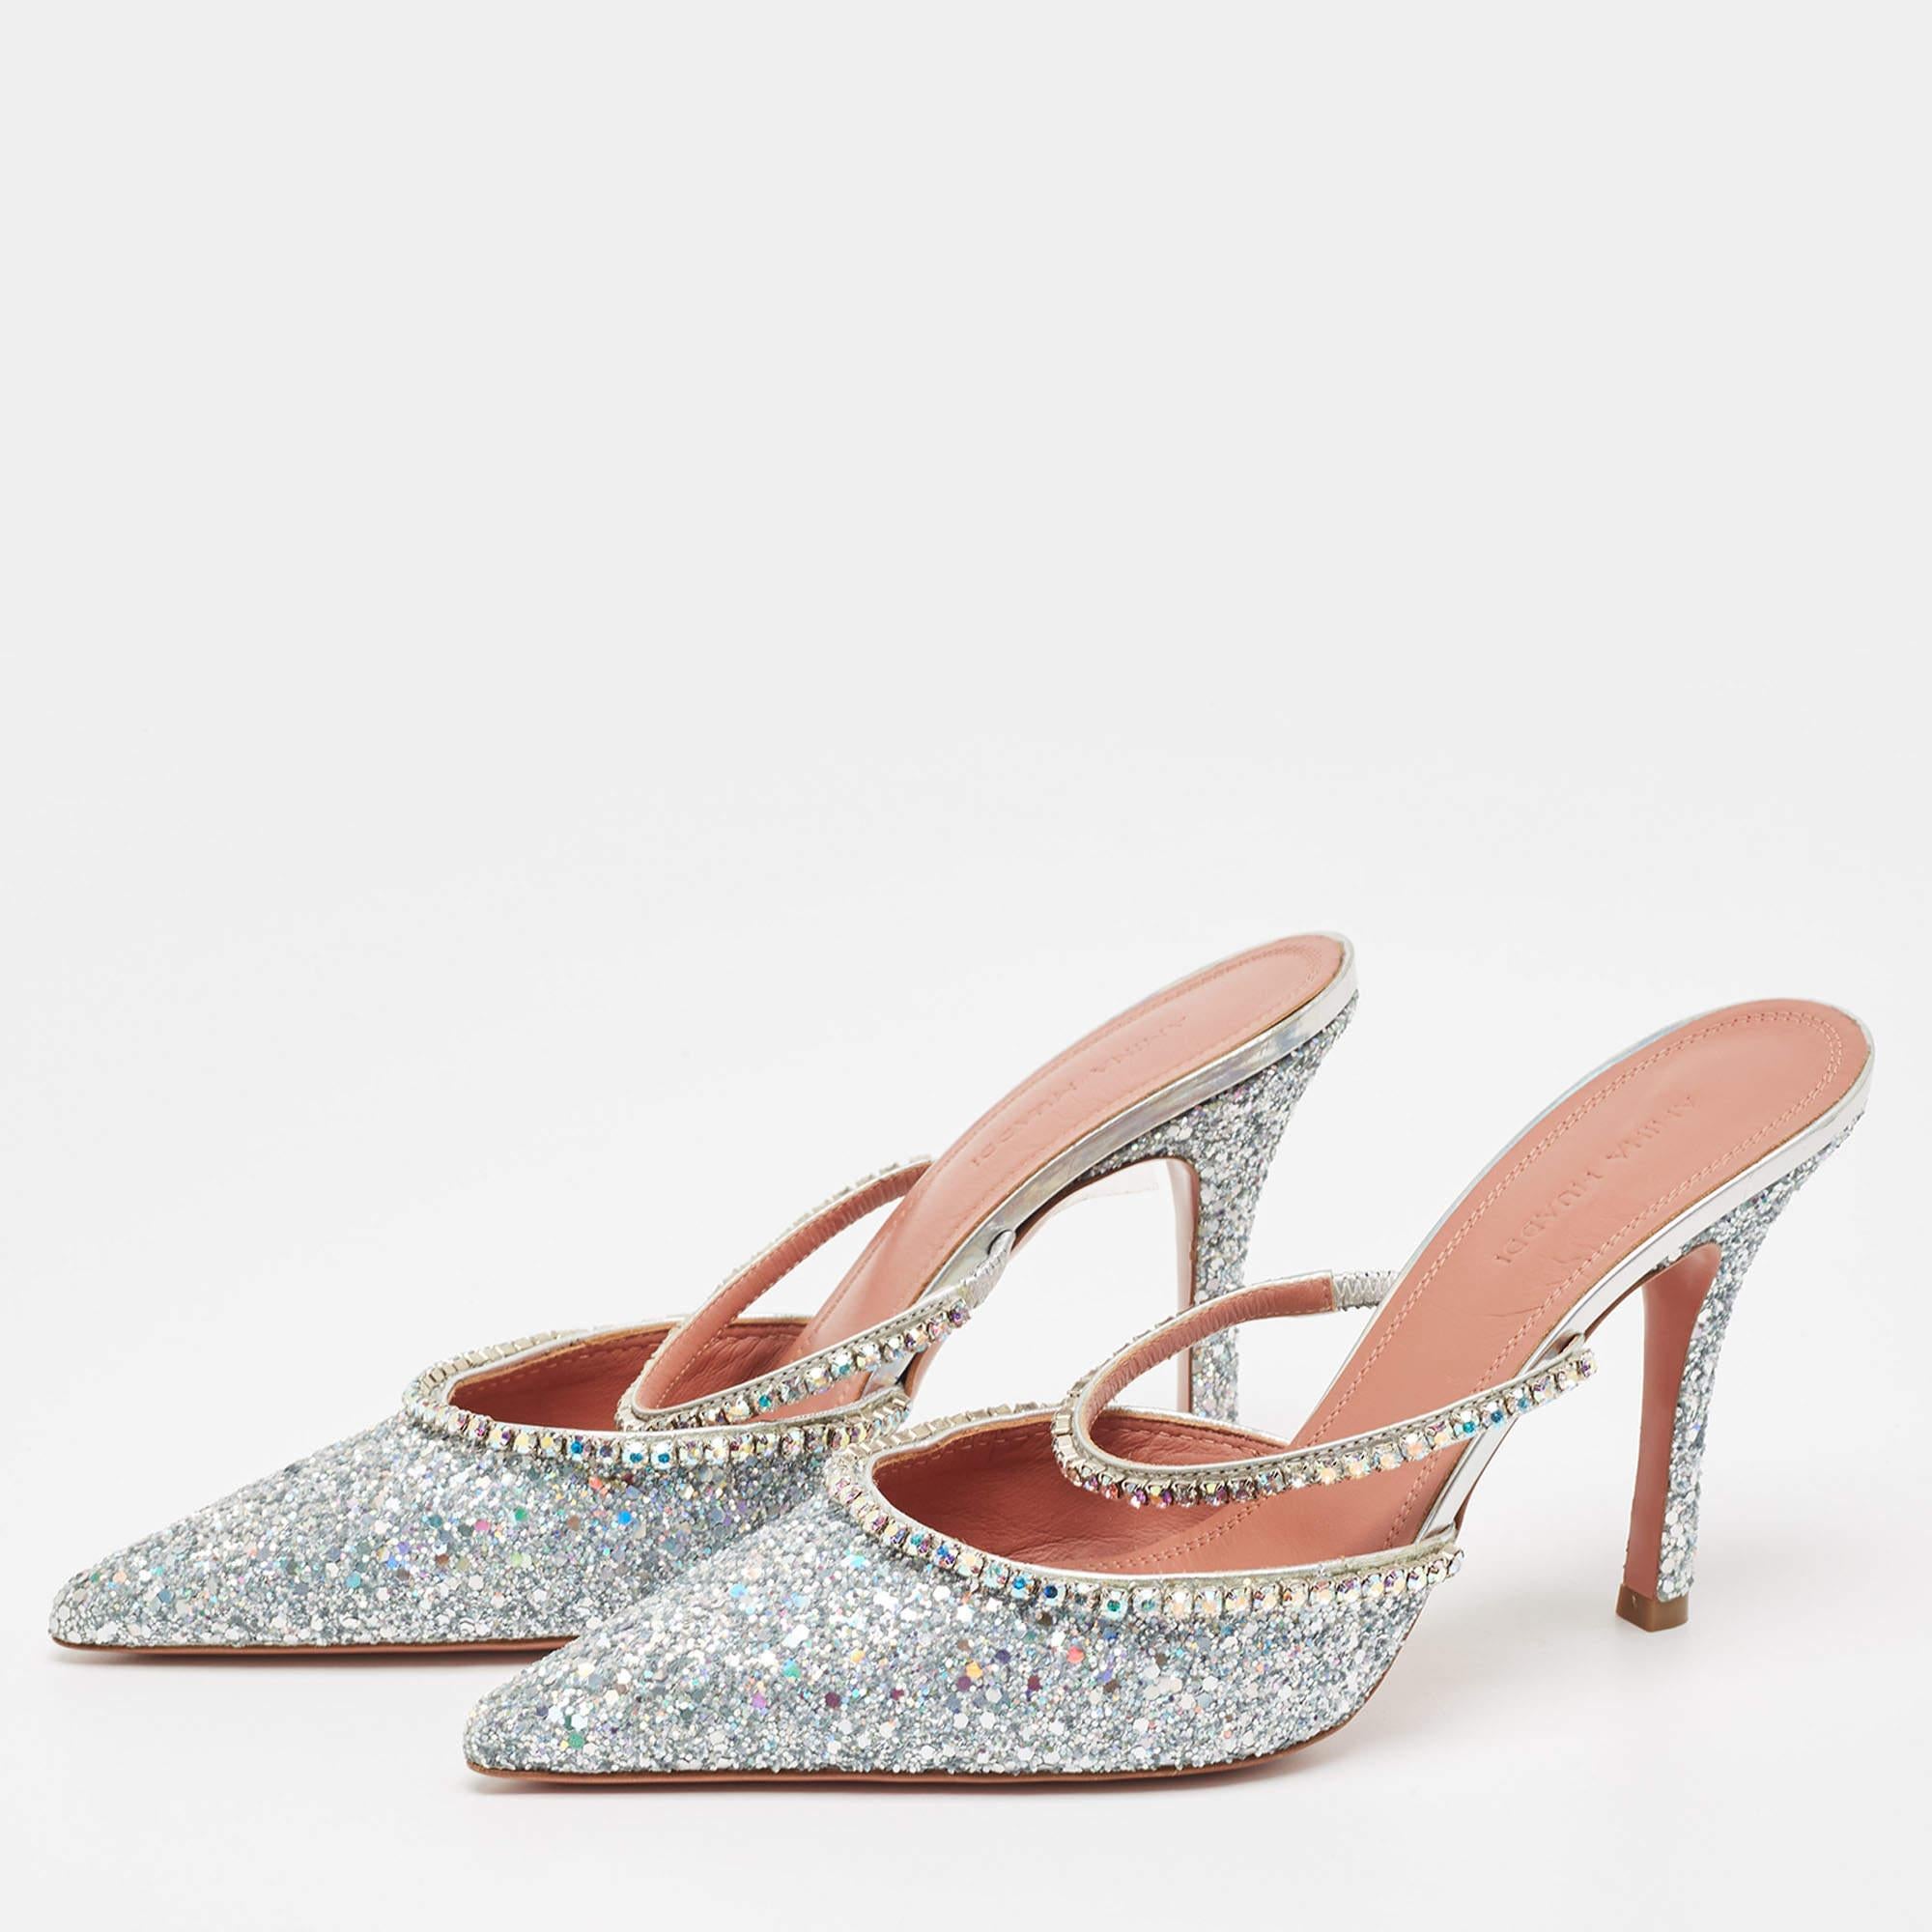 Amina Muaddi Silver Glitter Crystal Embellished Gilda Mules Size 39 1